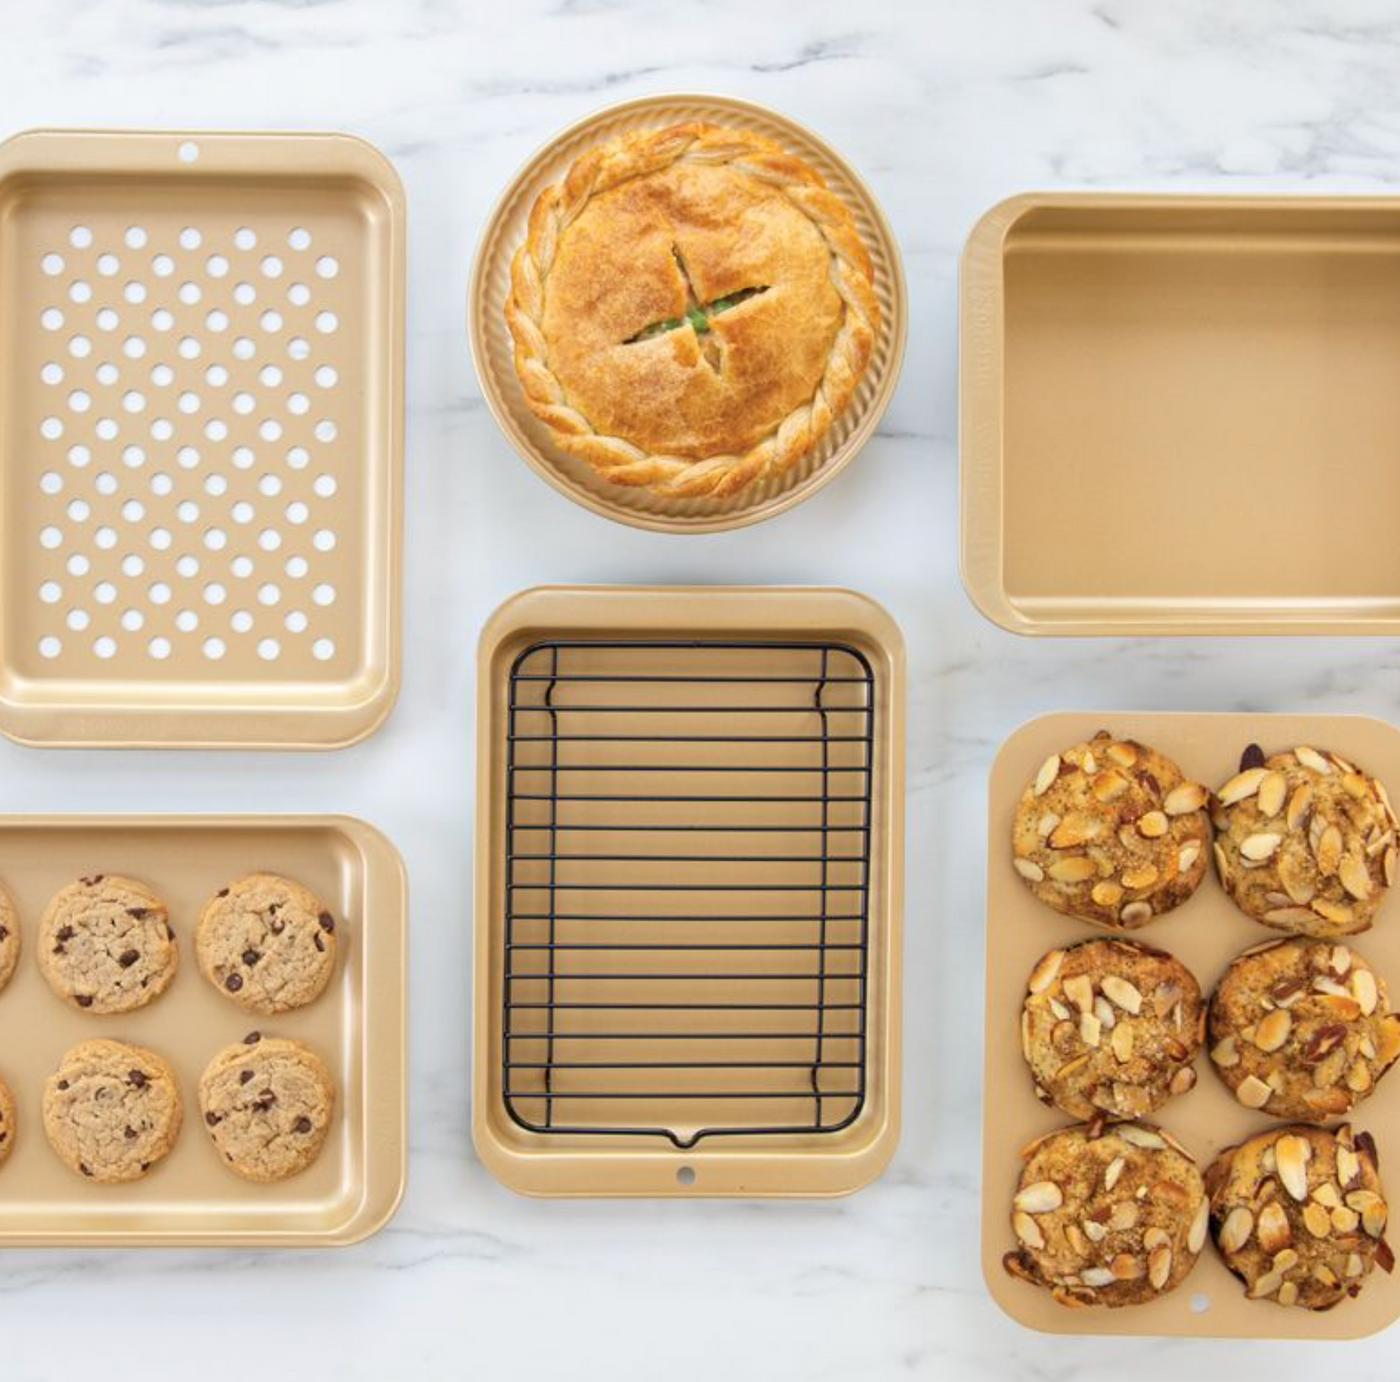 Nordic Ware Pie Baking Set 